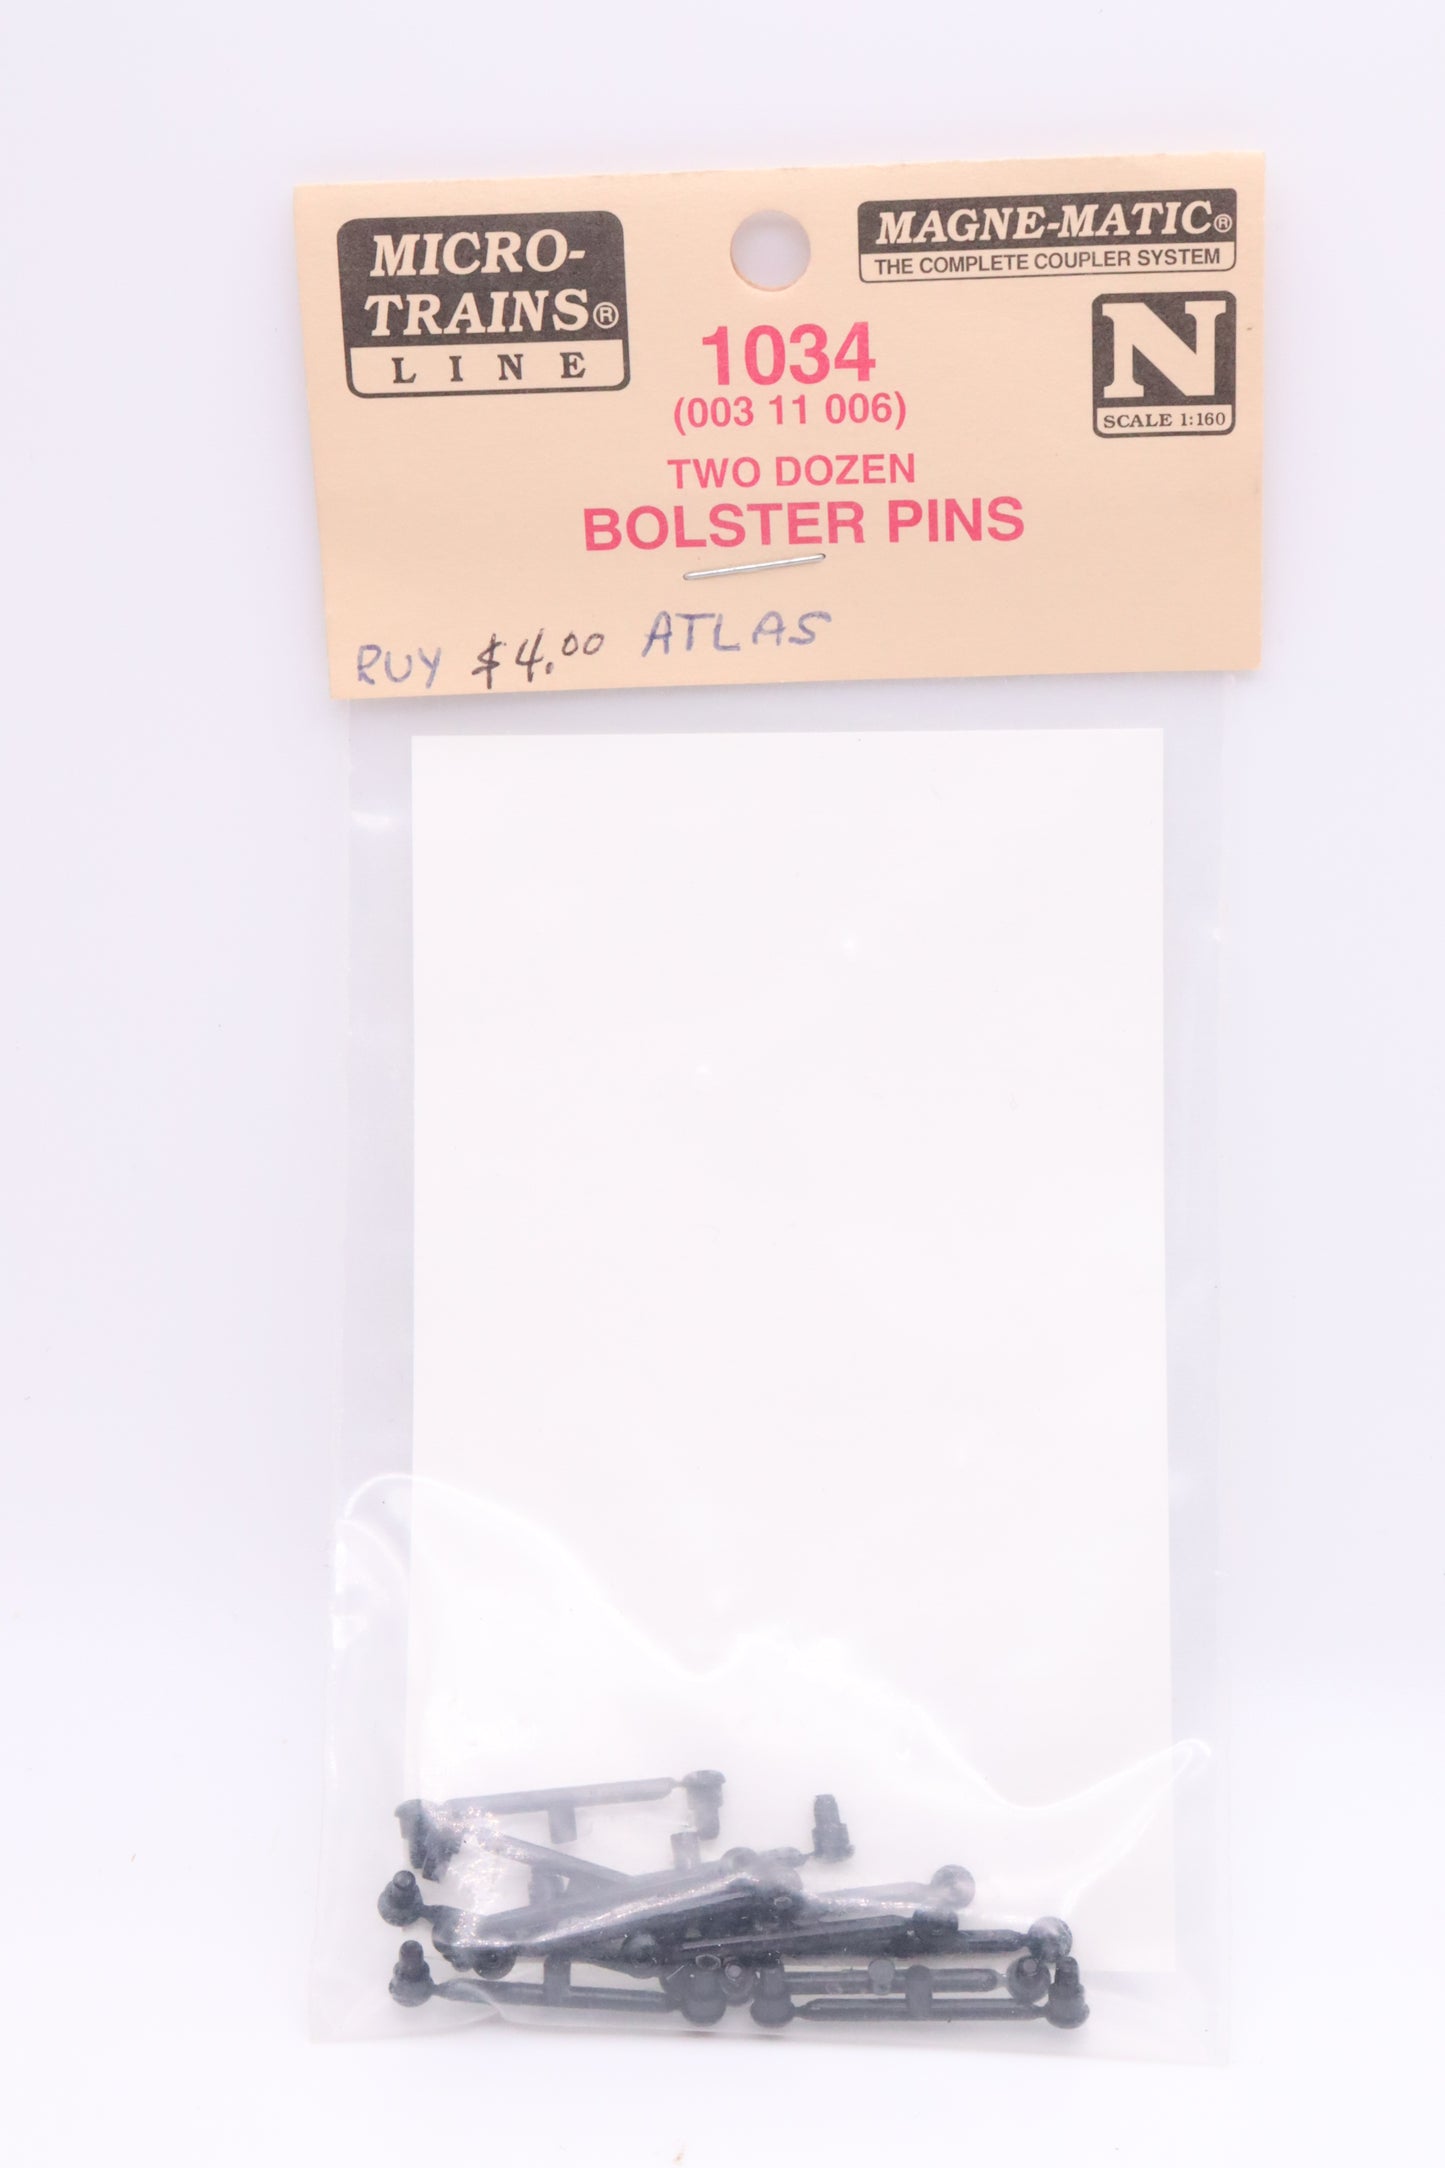 MTL-1034 - Bolster Pins For Atlas - Two Dozen